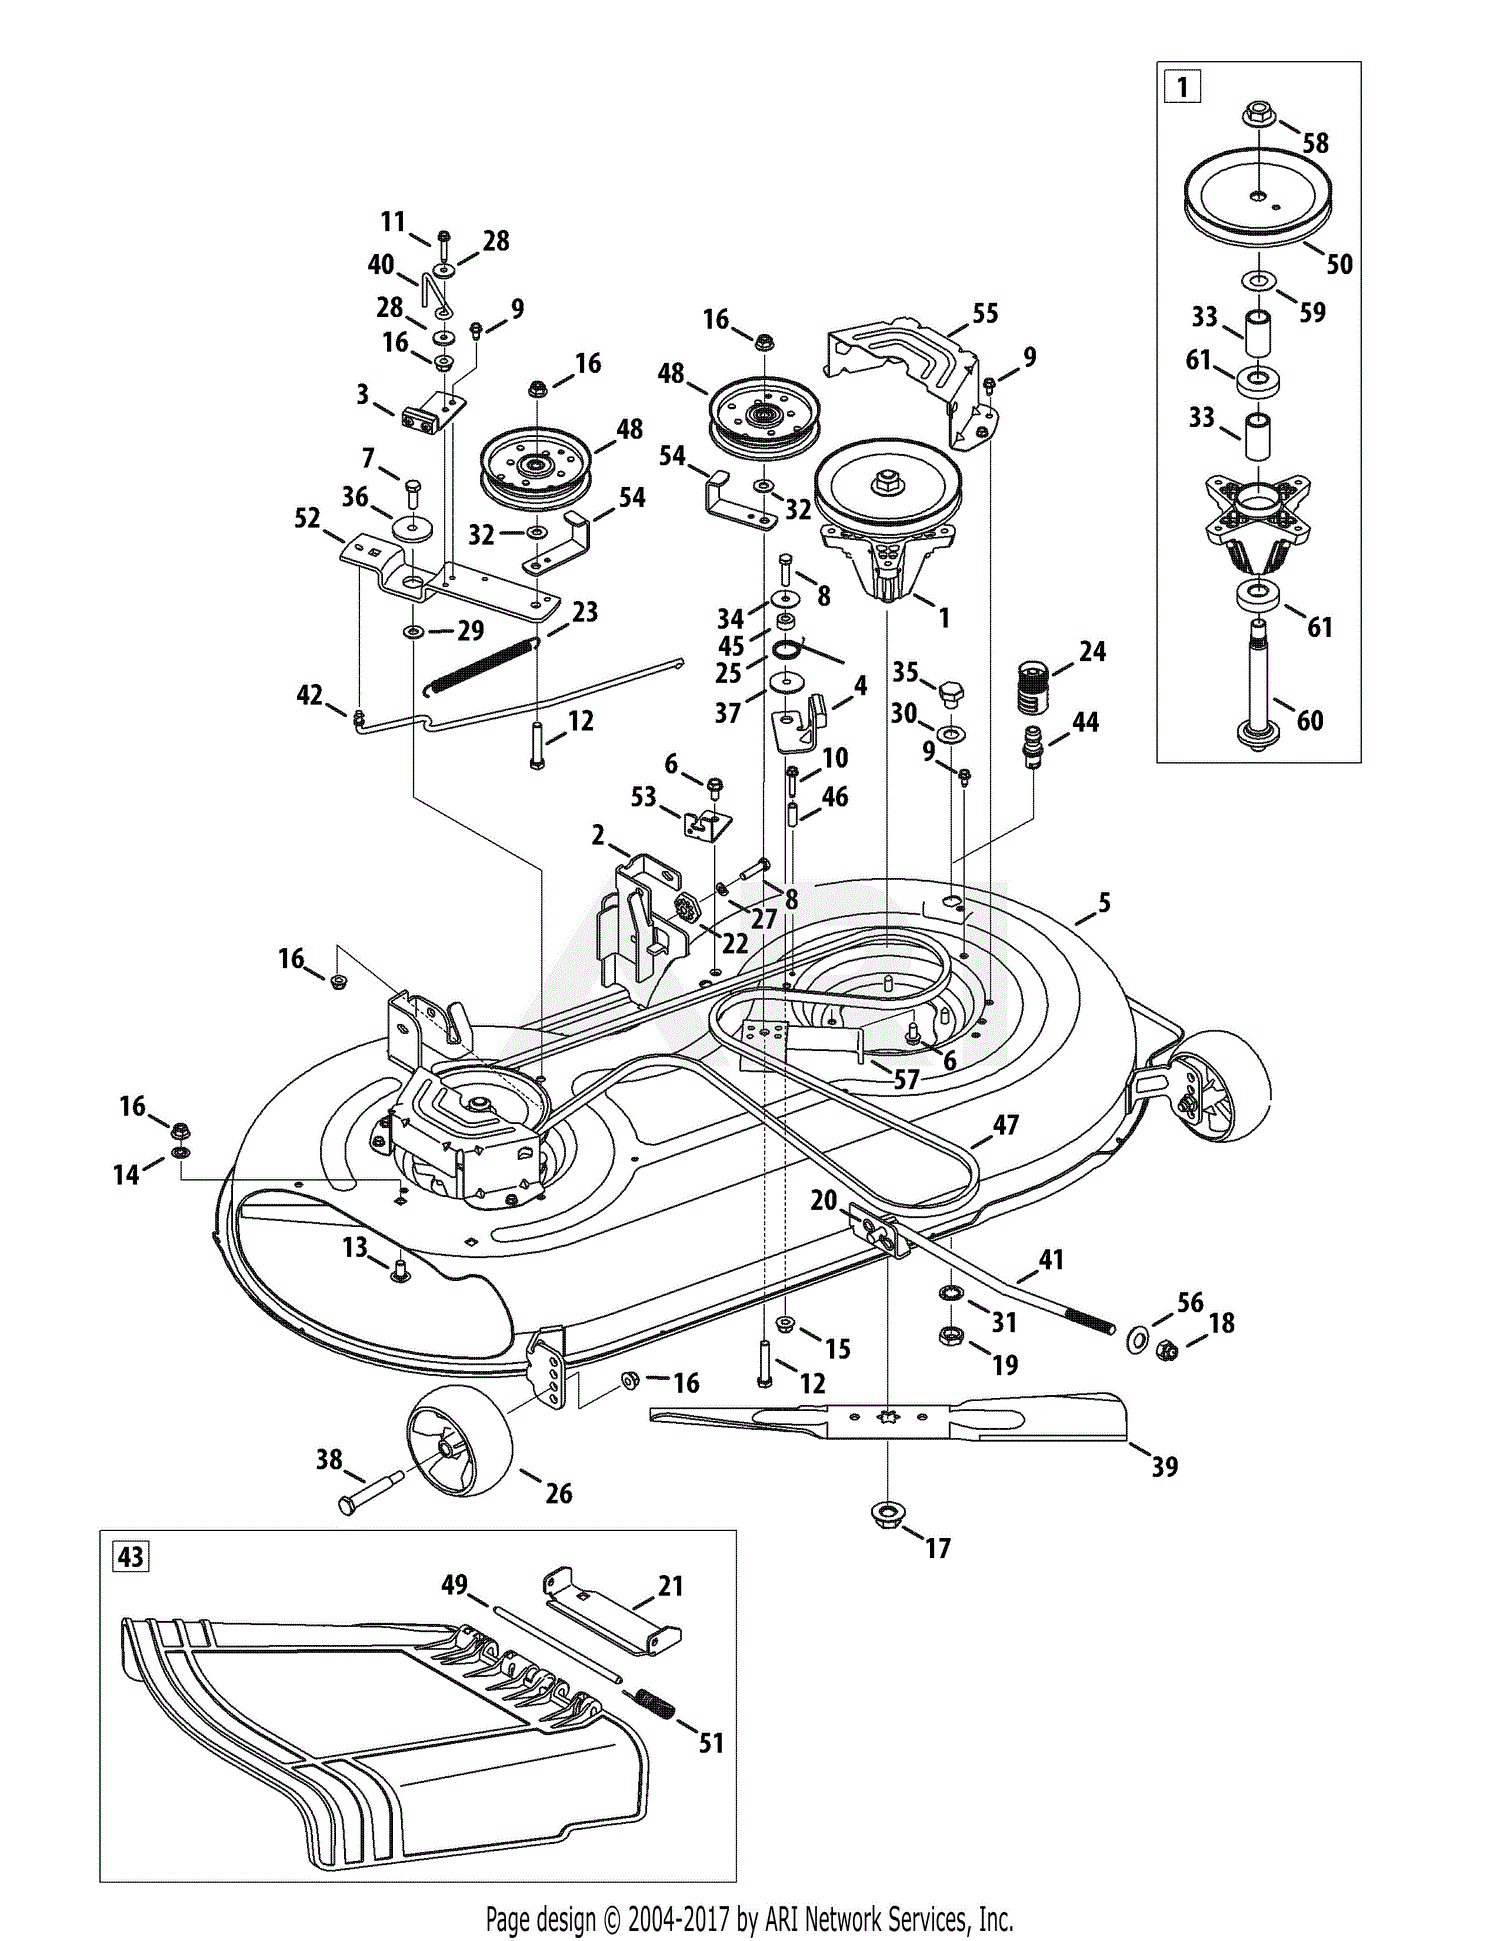 Yardman Lawn Mower Parts Diagram - Ekerekizul